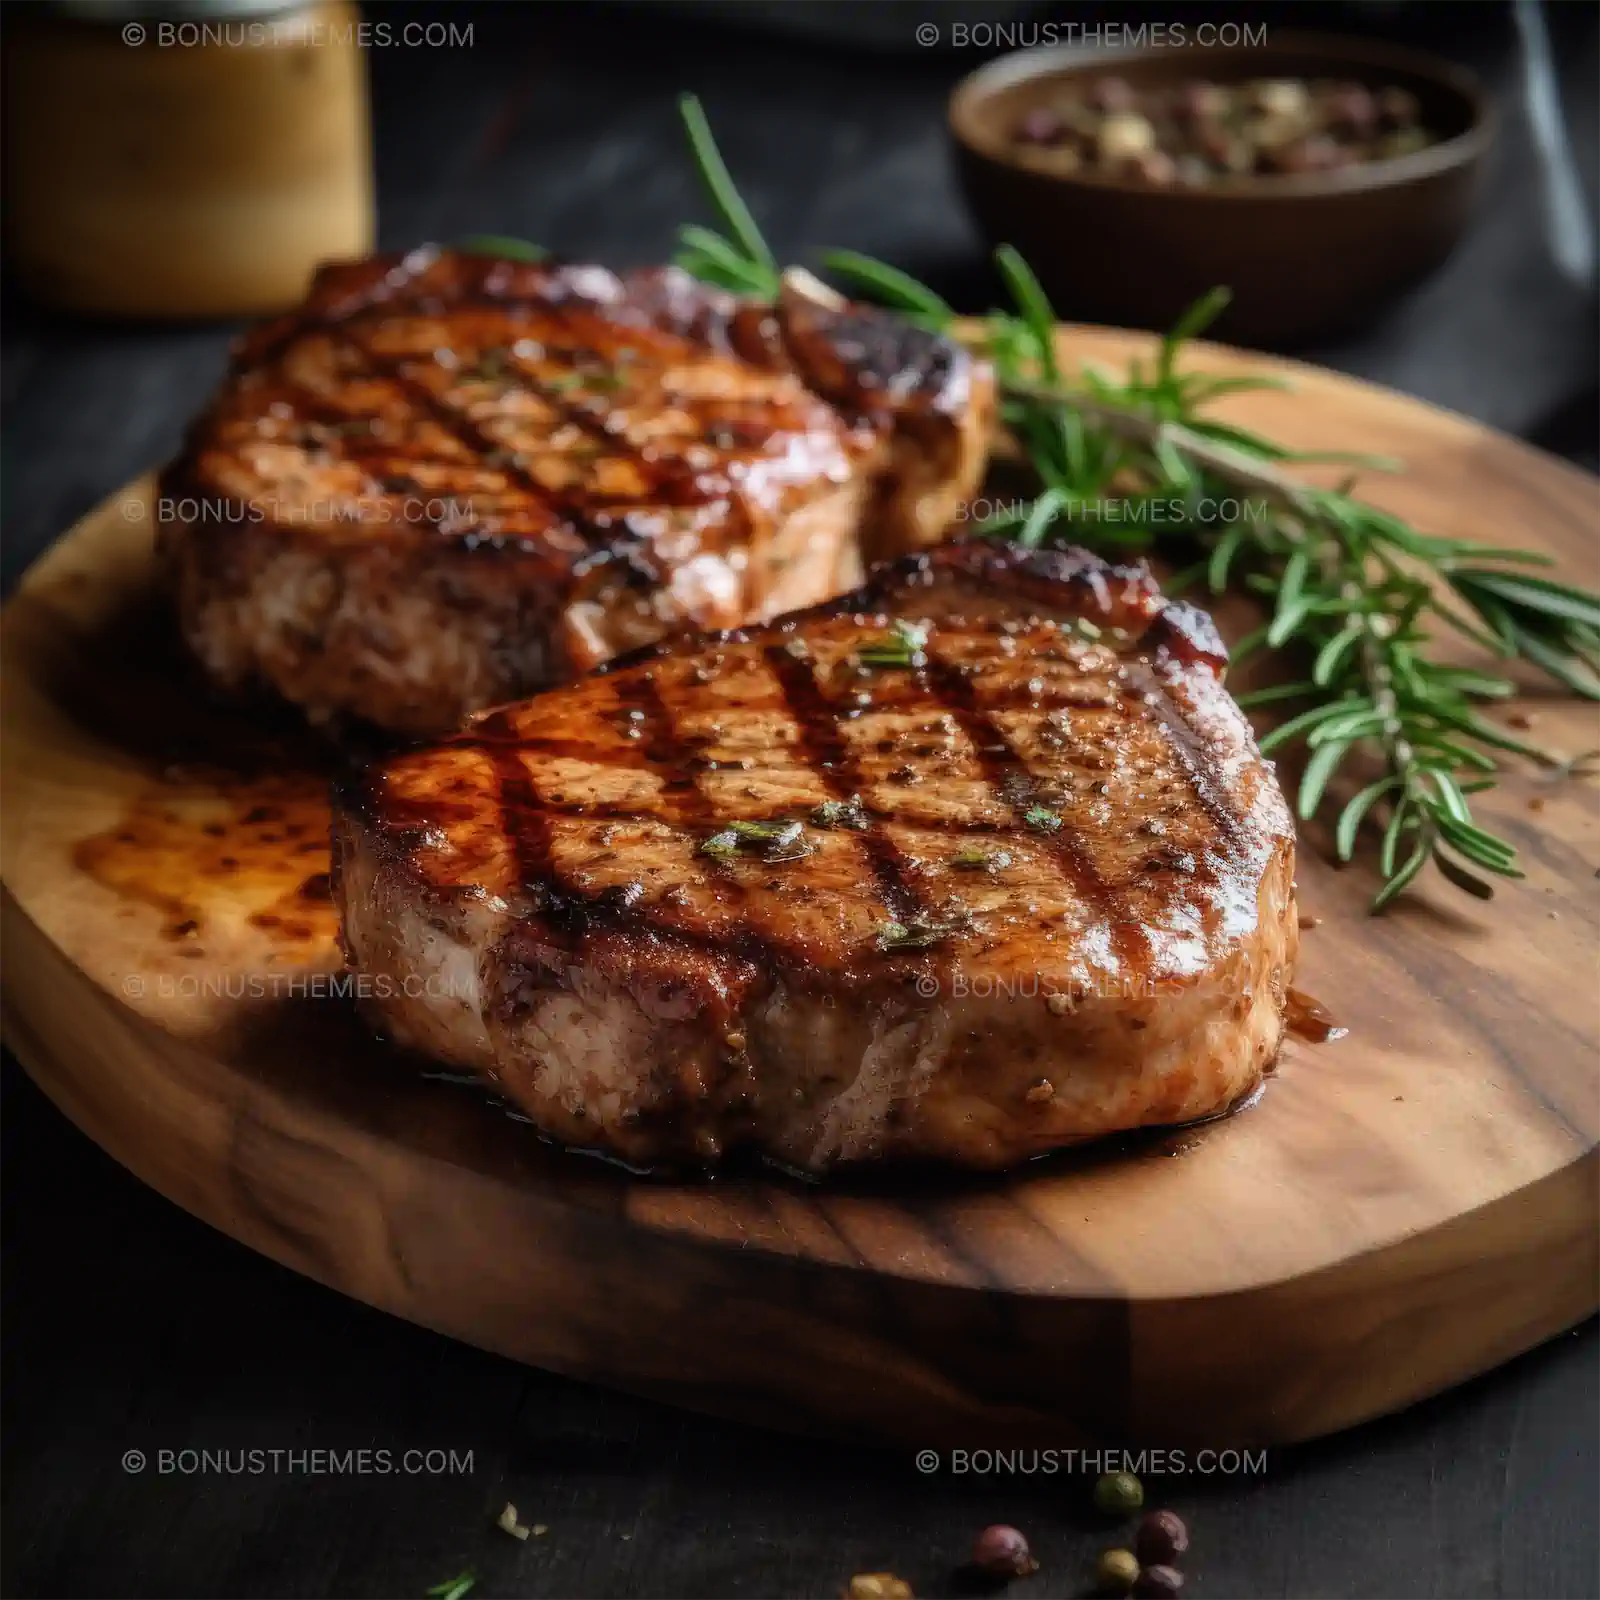 Grilled steak on a wood